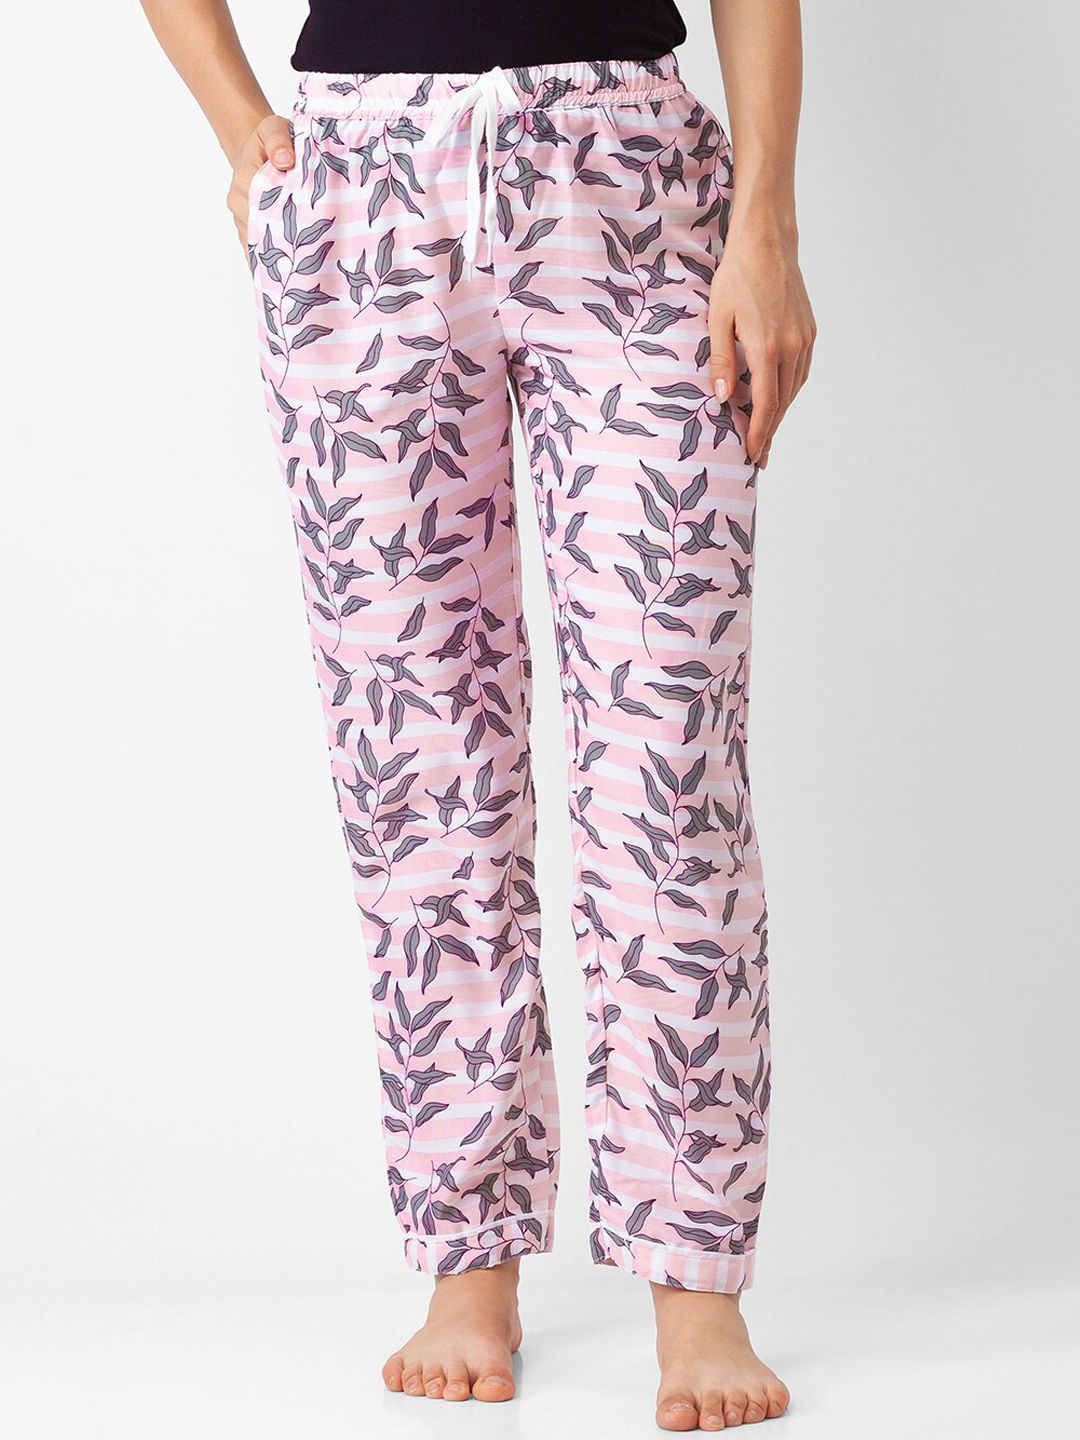 NOIRA Pink Printed Cotton Lounge Pants Price in India